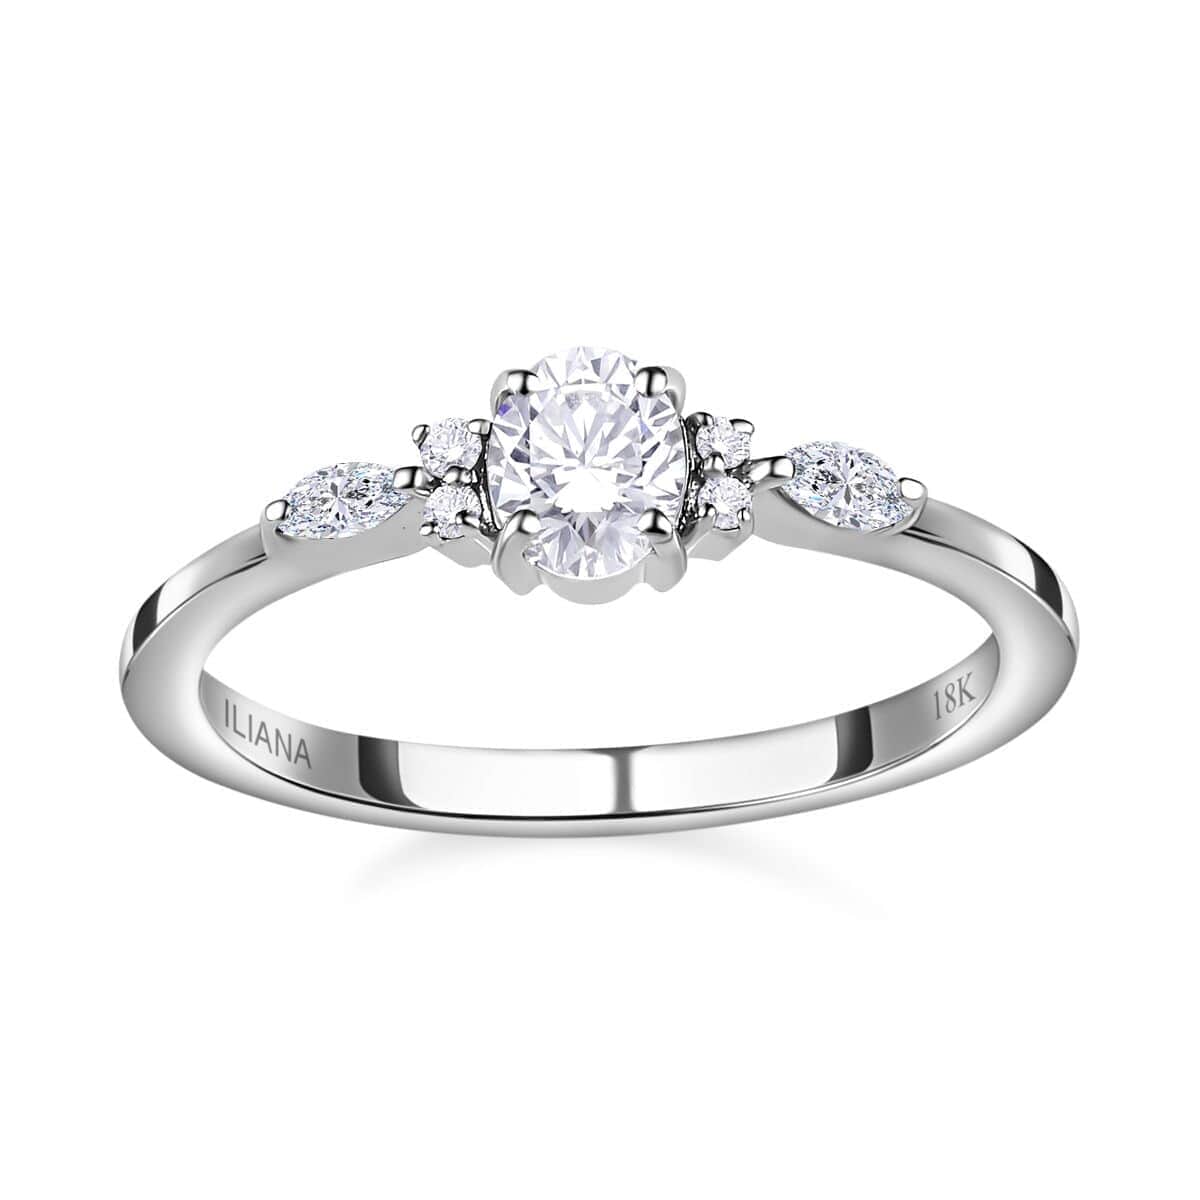 Iliana 18K White Gold Diamond (G-H, SI) Ring (Size 6.0) 0.50 ctw image number 0